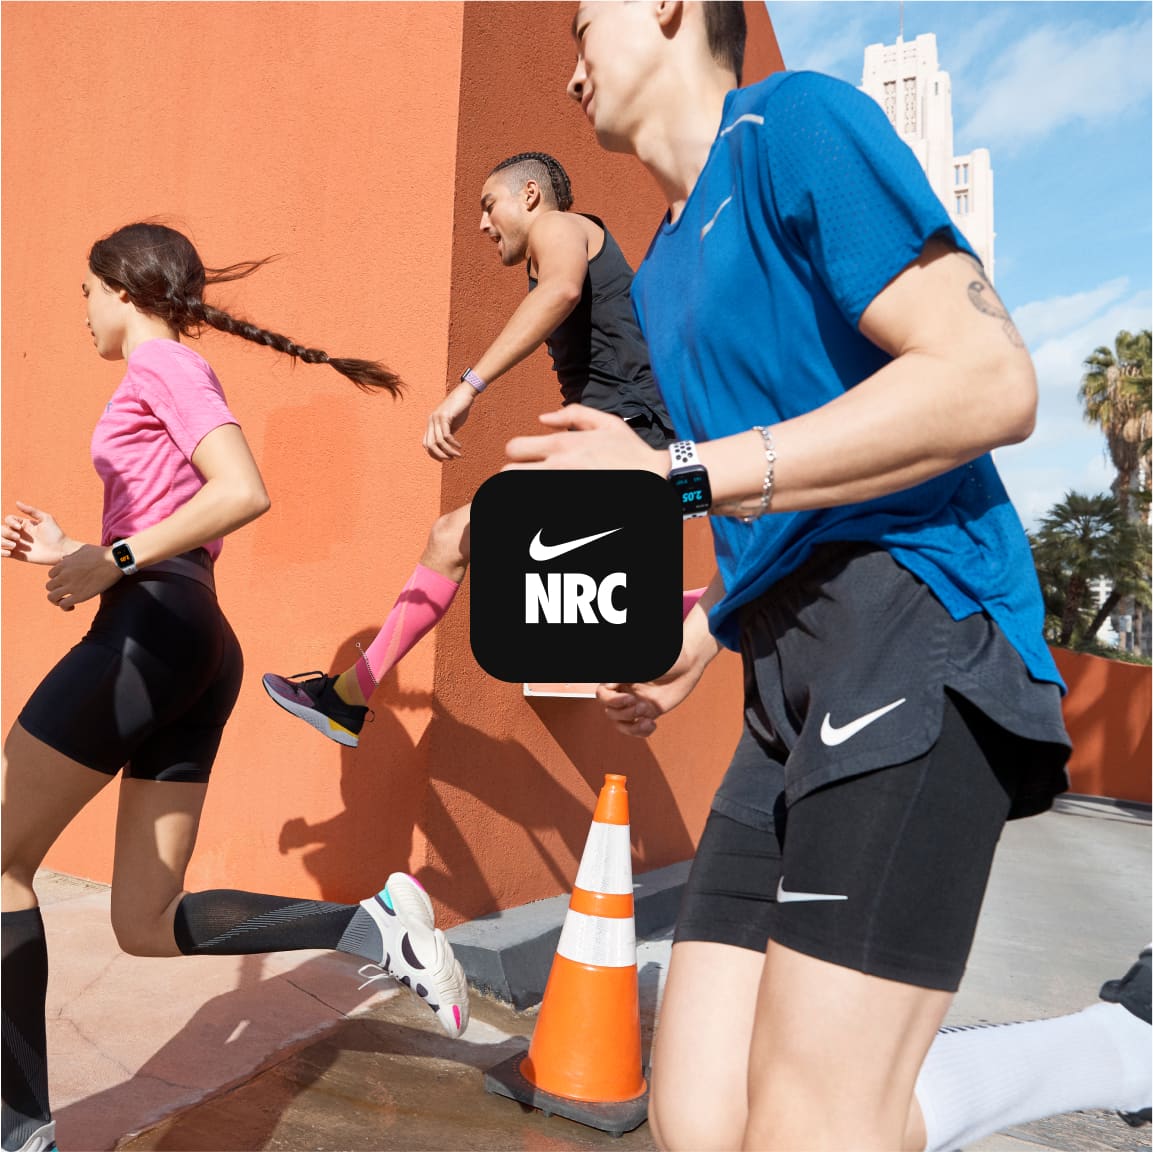 Omgeving amplitude Kapper Nike Training Club App. Home Workouts. Nike.com